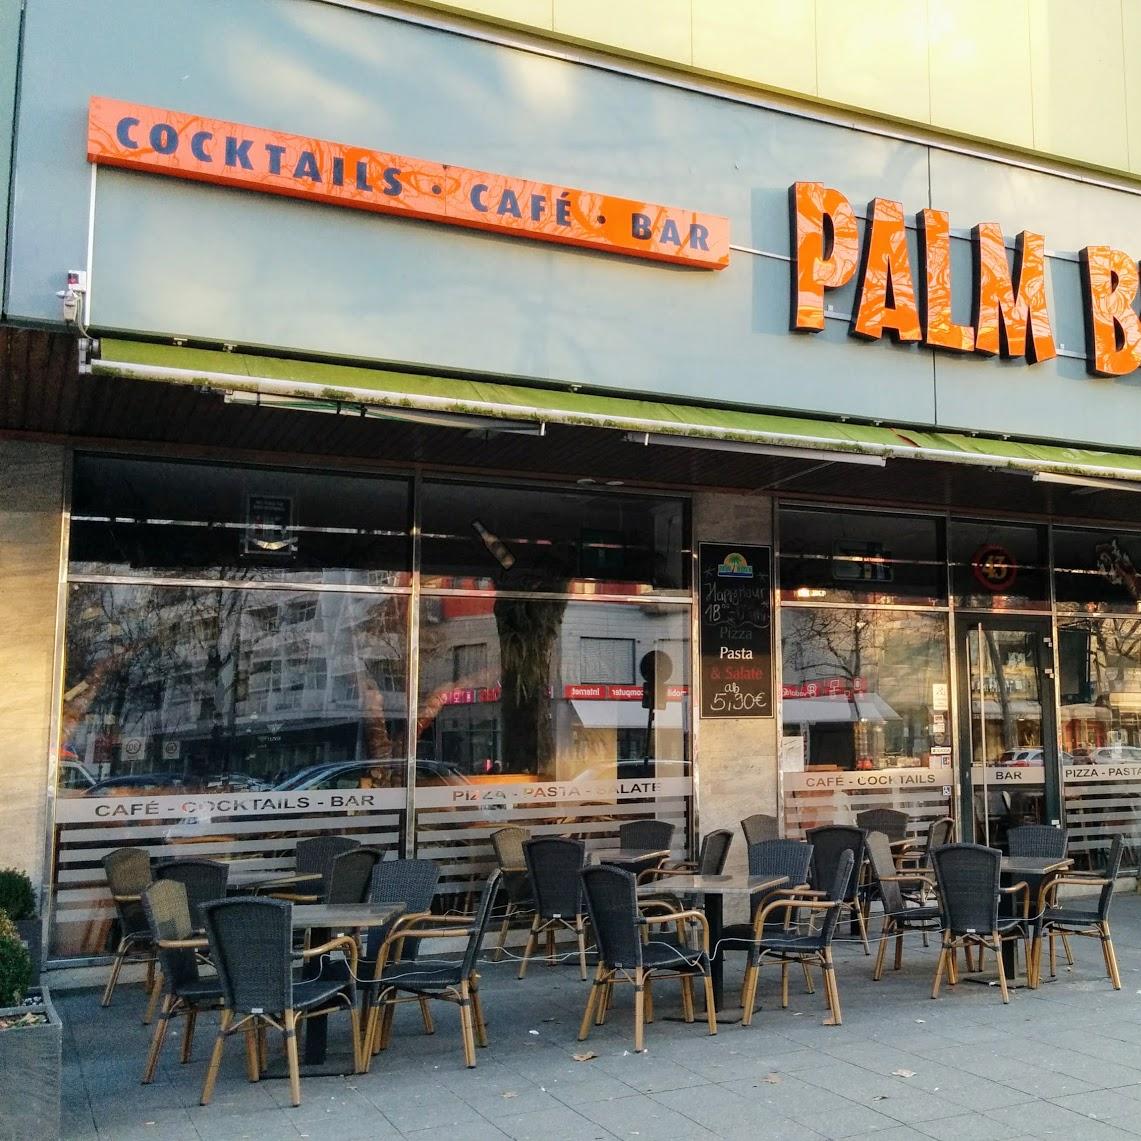 Restaurant "Palm Beach" in Berlin